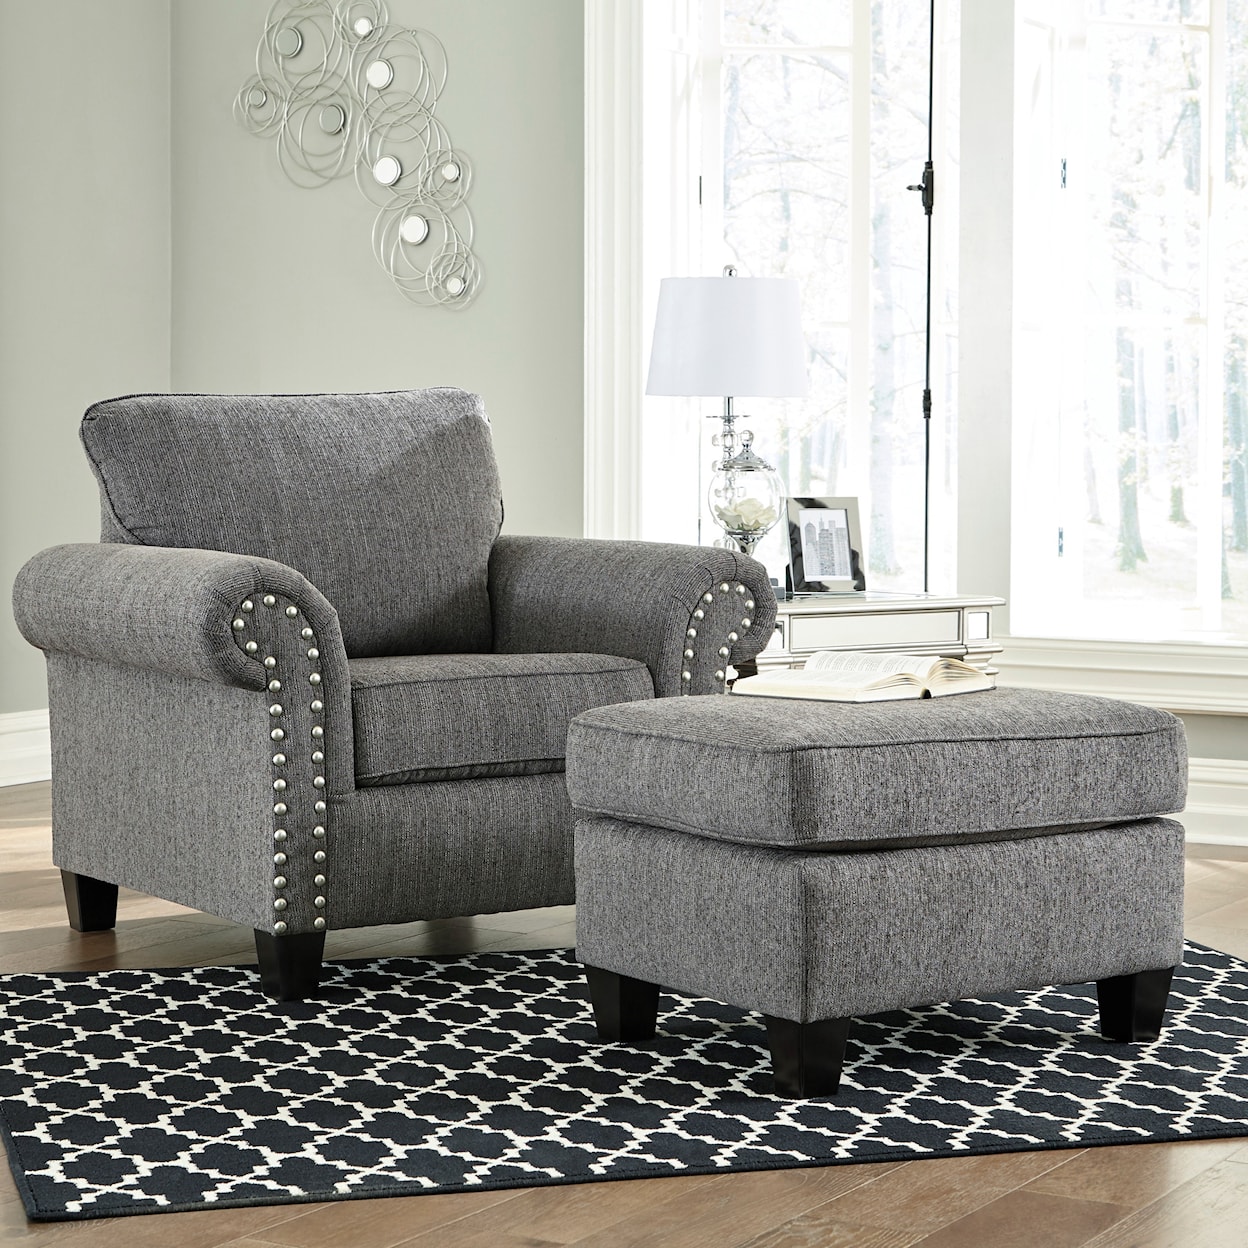 Ashley Furniture Benchcraft Agleno Chair and Ottoman